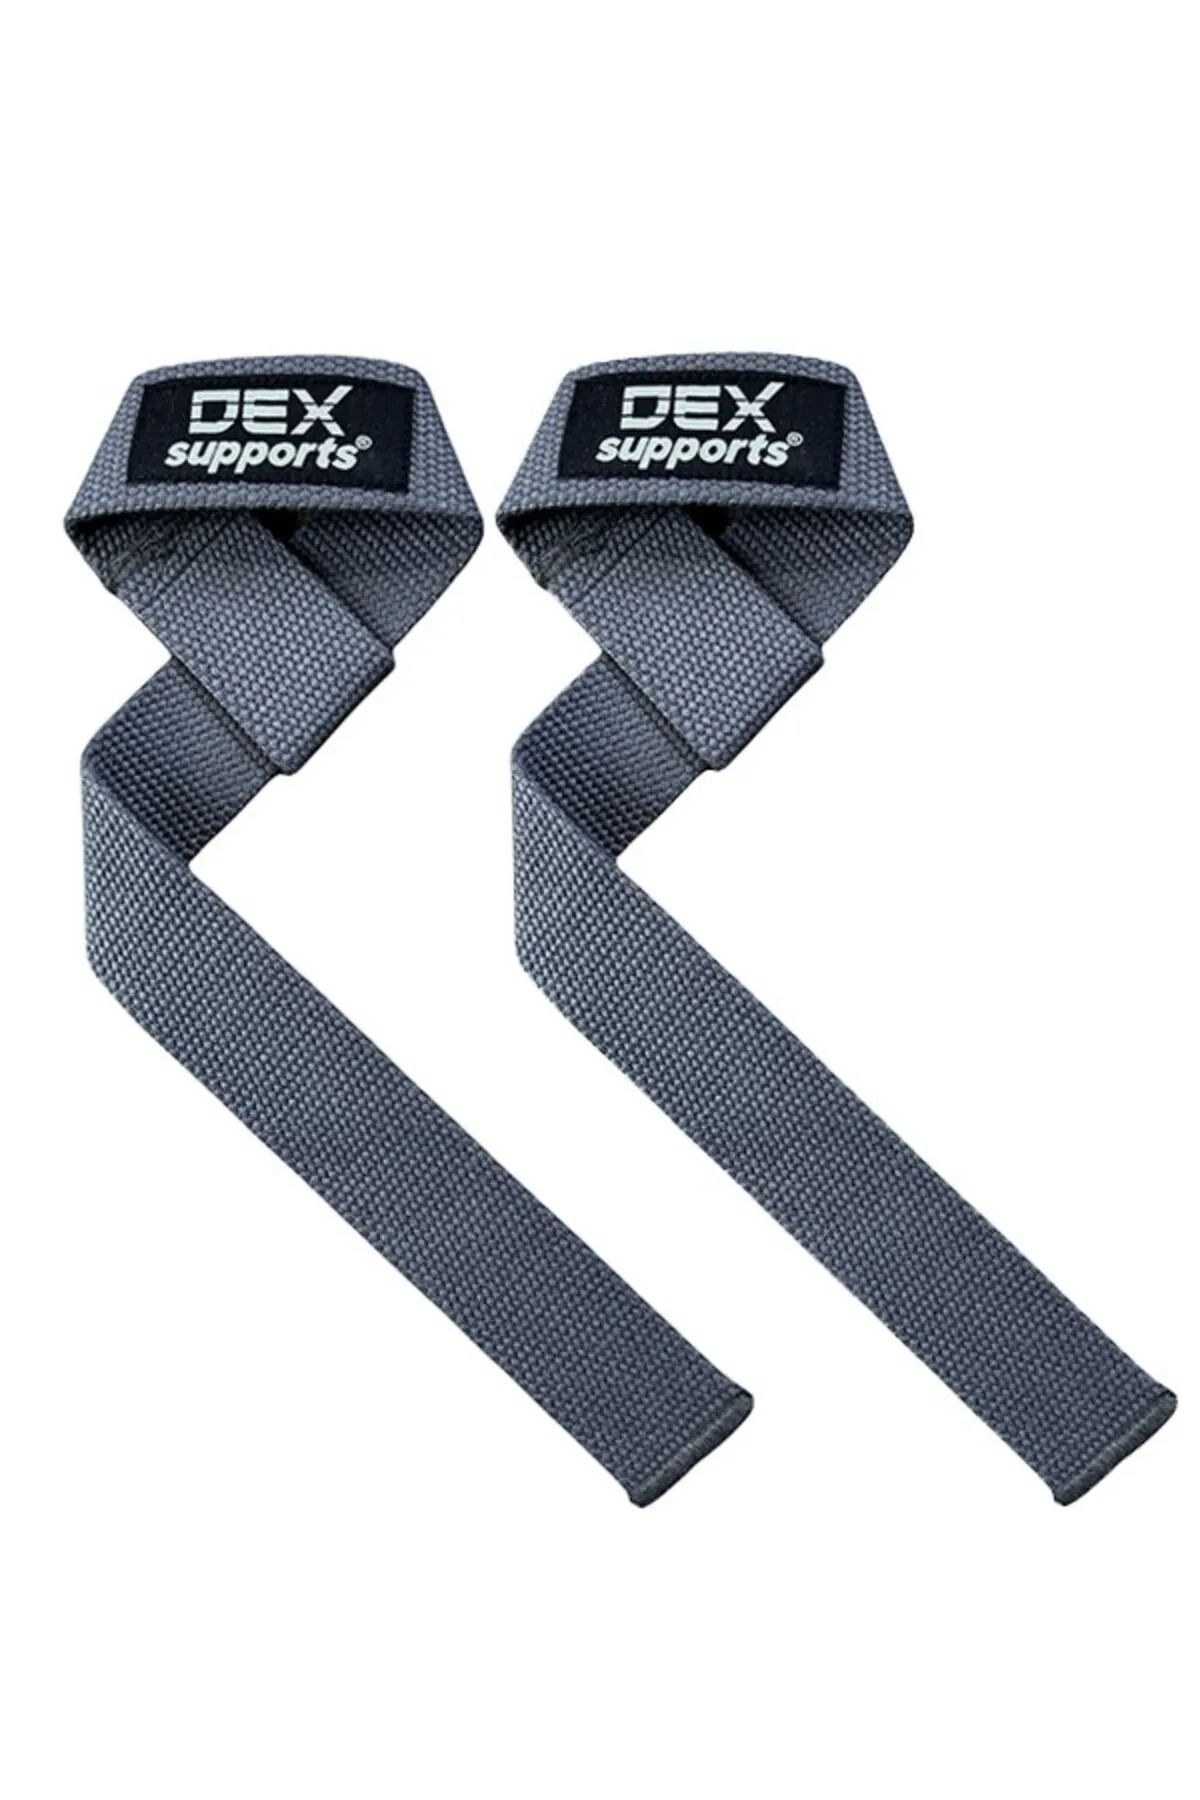 Dex Supports Lasting Energy Ağırlık Kaldırma Kayışı Fitness Crossfit ( Lifting Straps ) 2' li Paket Gri